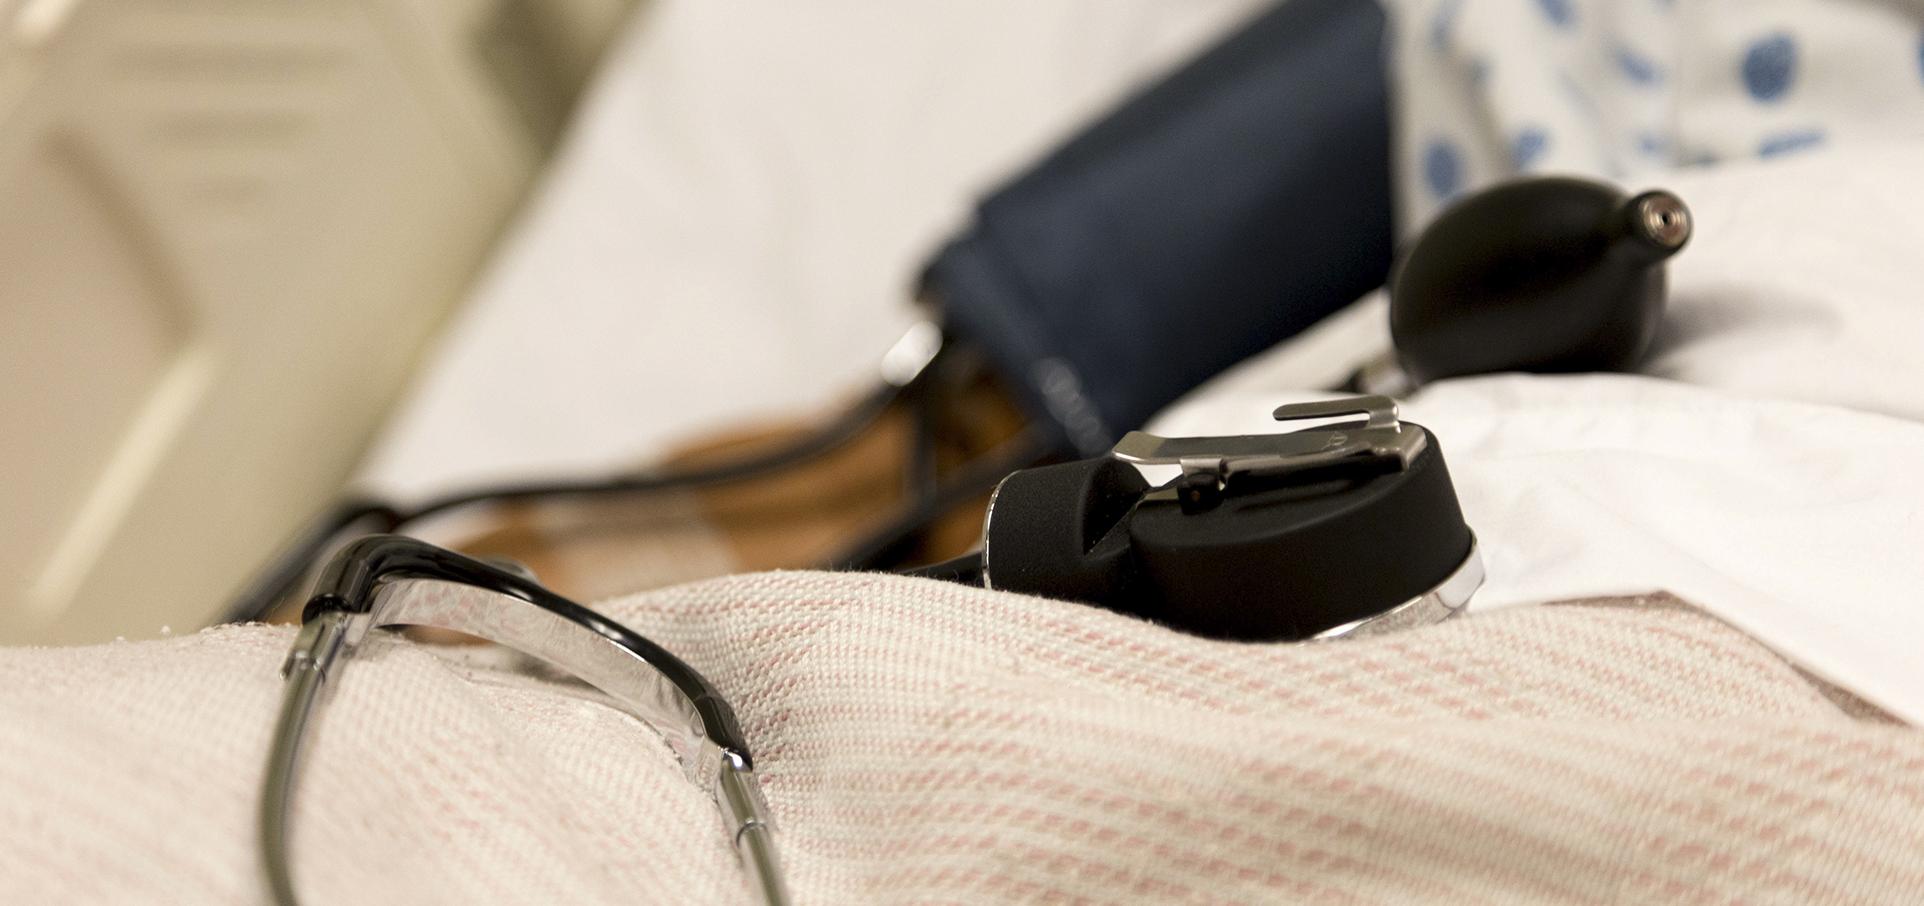 blood pressure cuff on patient bed